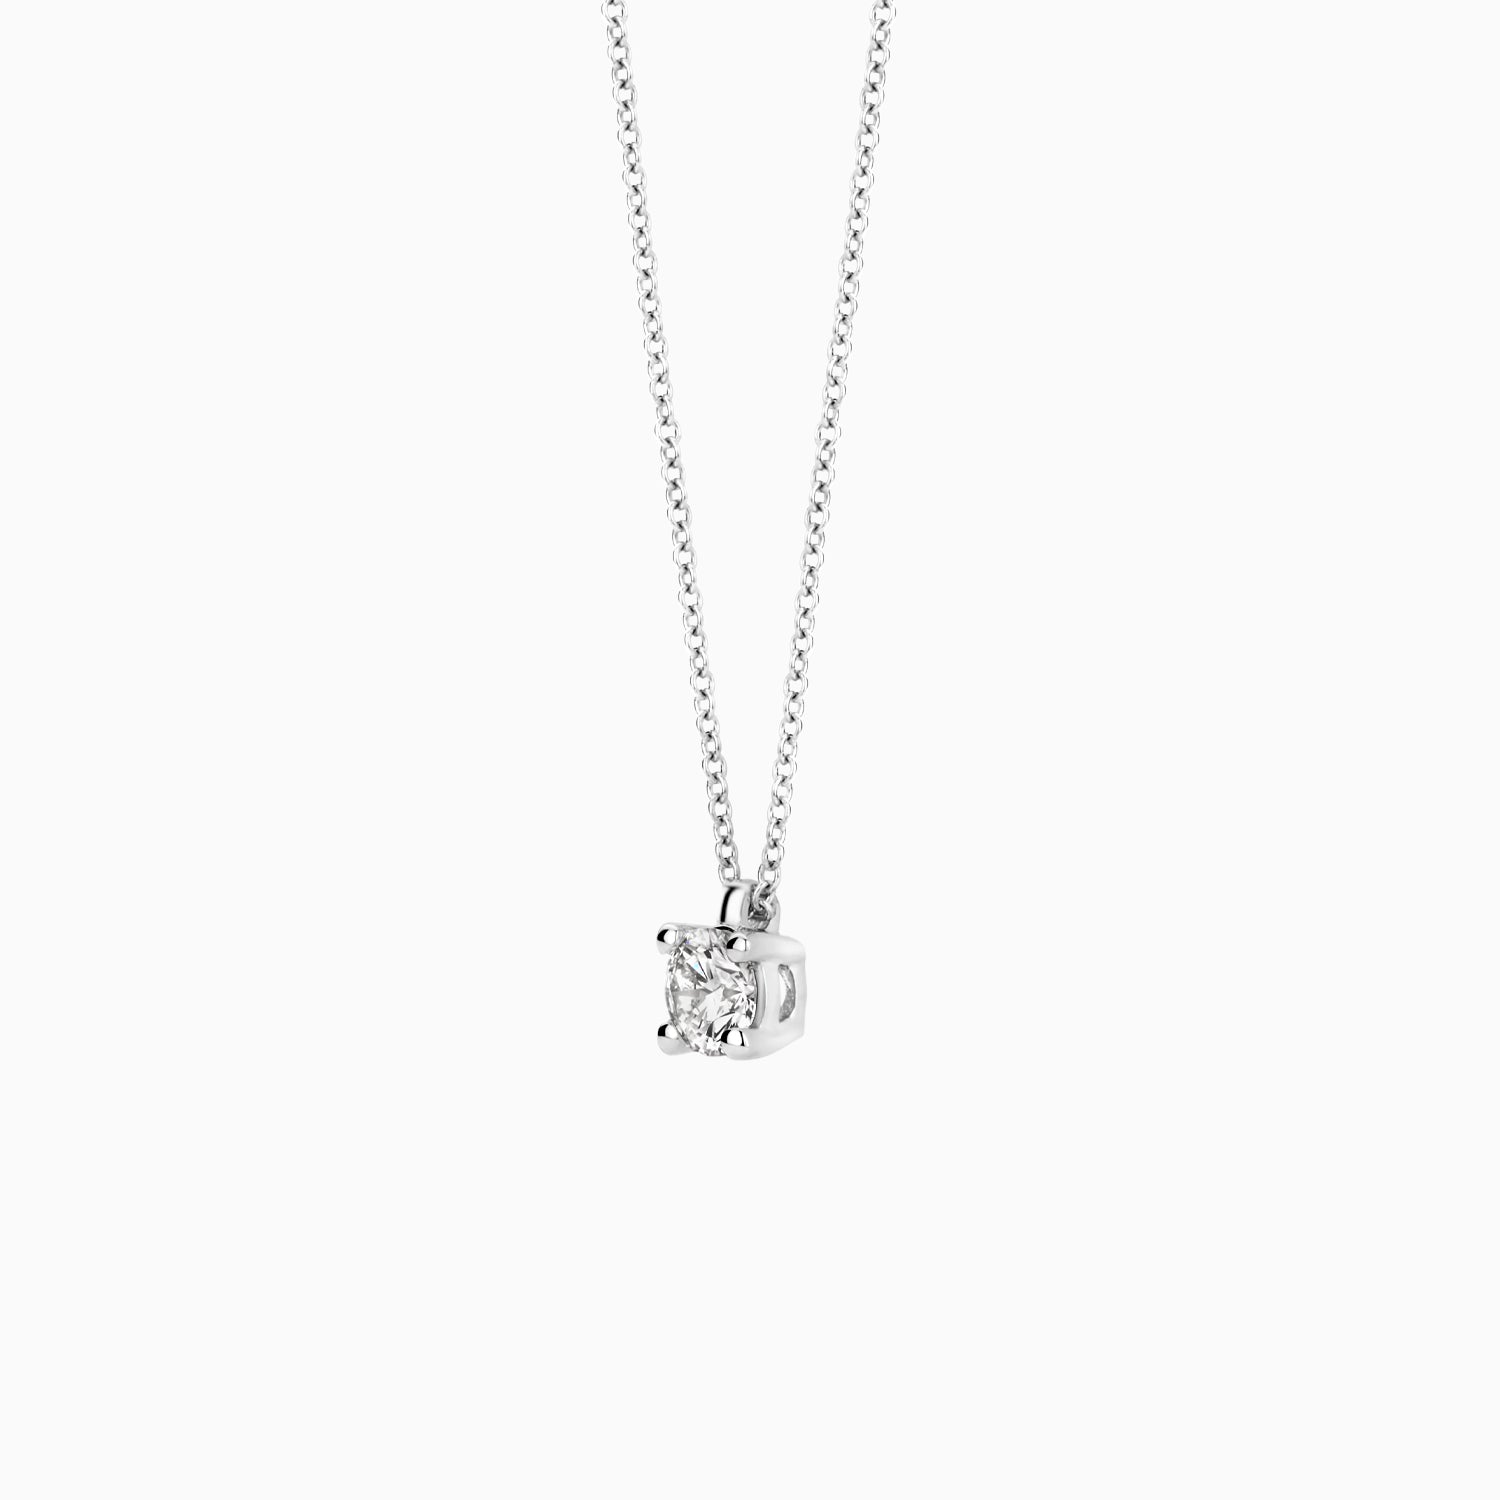 Lab diamonds necklace LG3001W - 14k White gold